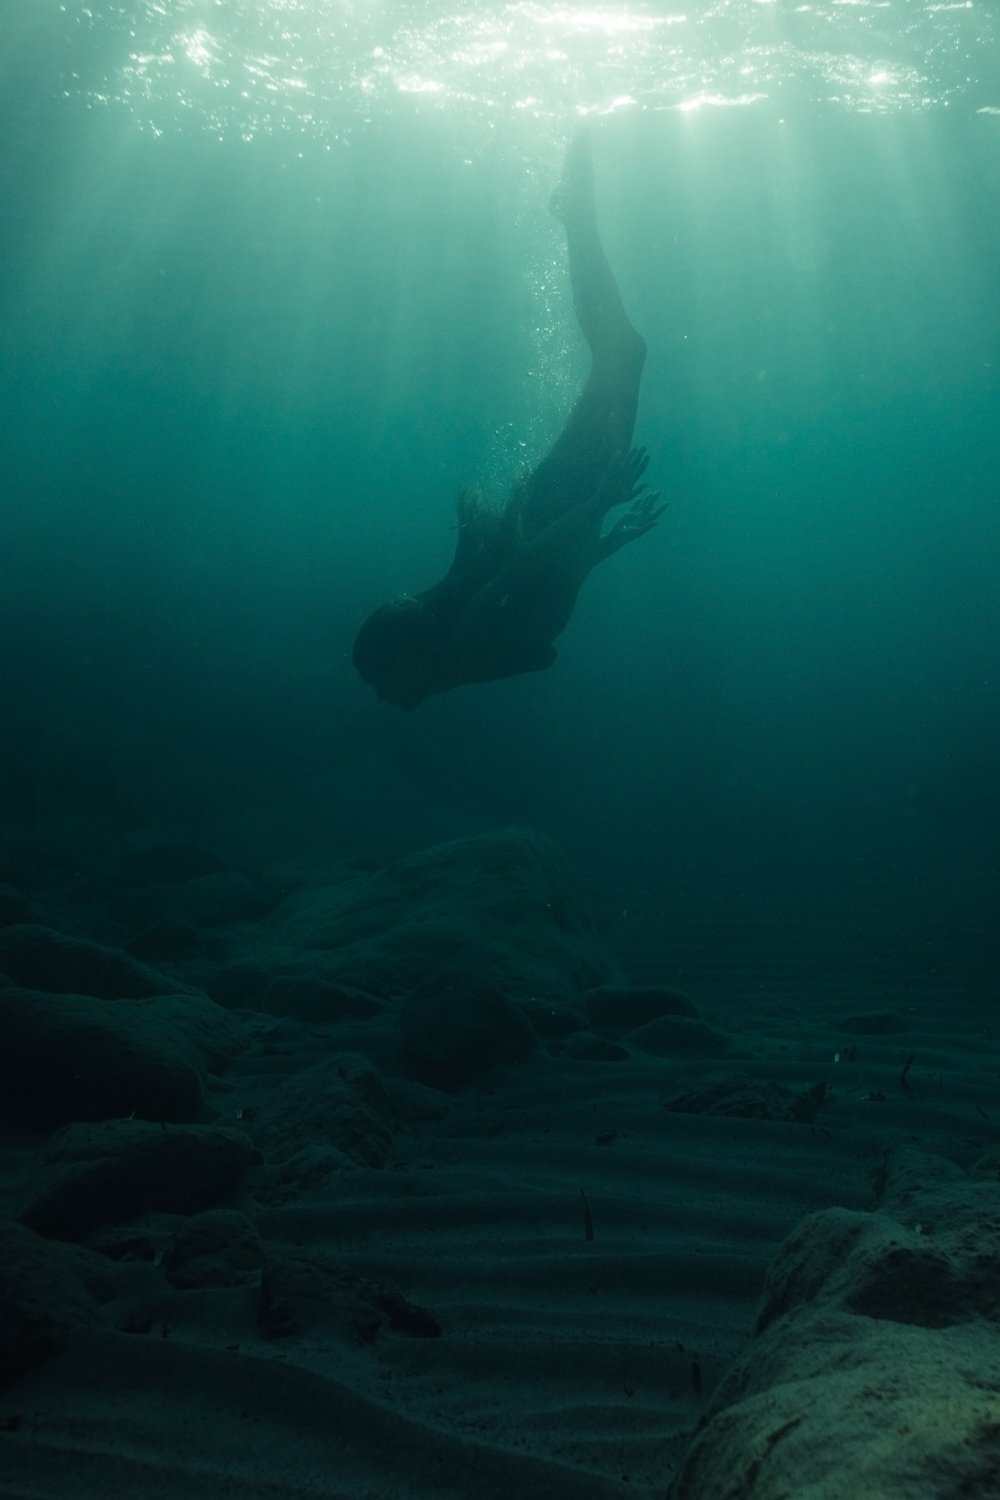 siren sirens corse corsica underwater photography photographe sous leau mermaid femme woman women nude nue fine art photography Krista Espino ajaccio sea Mediterranean france travel-1.jpg